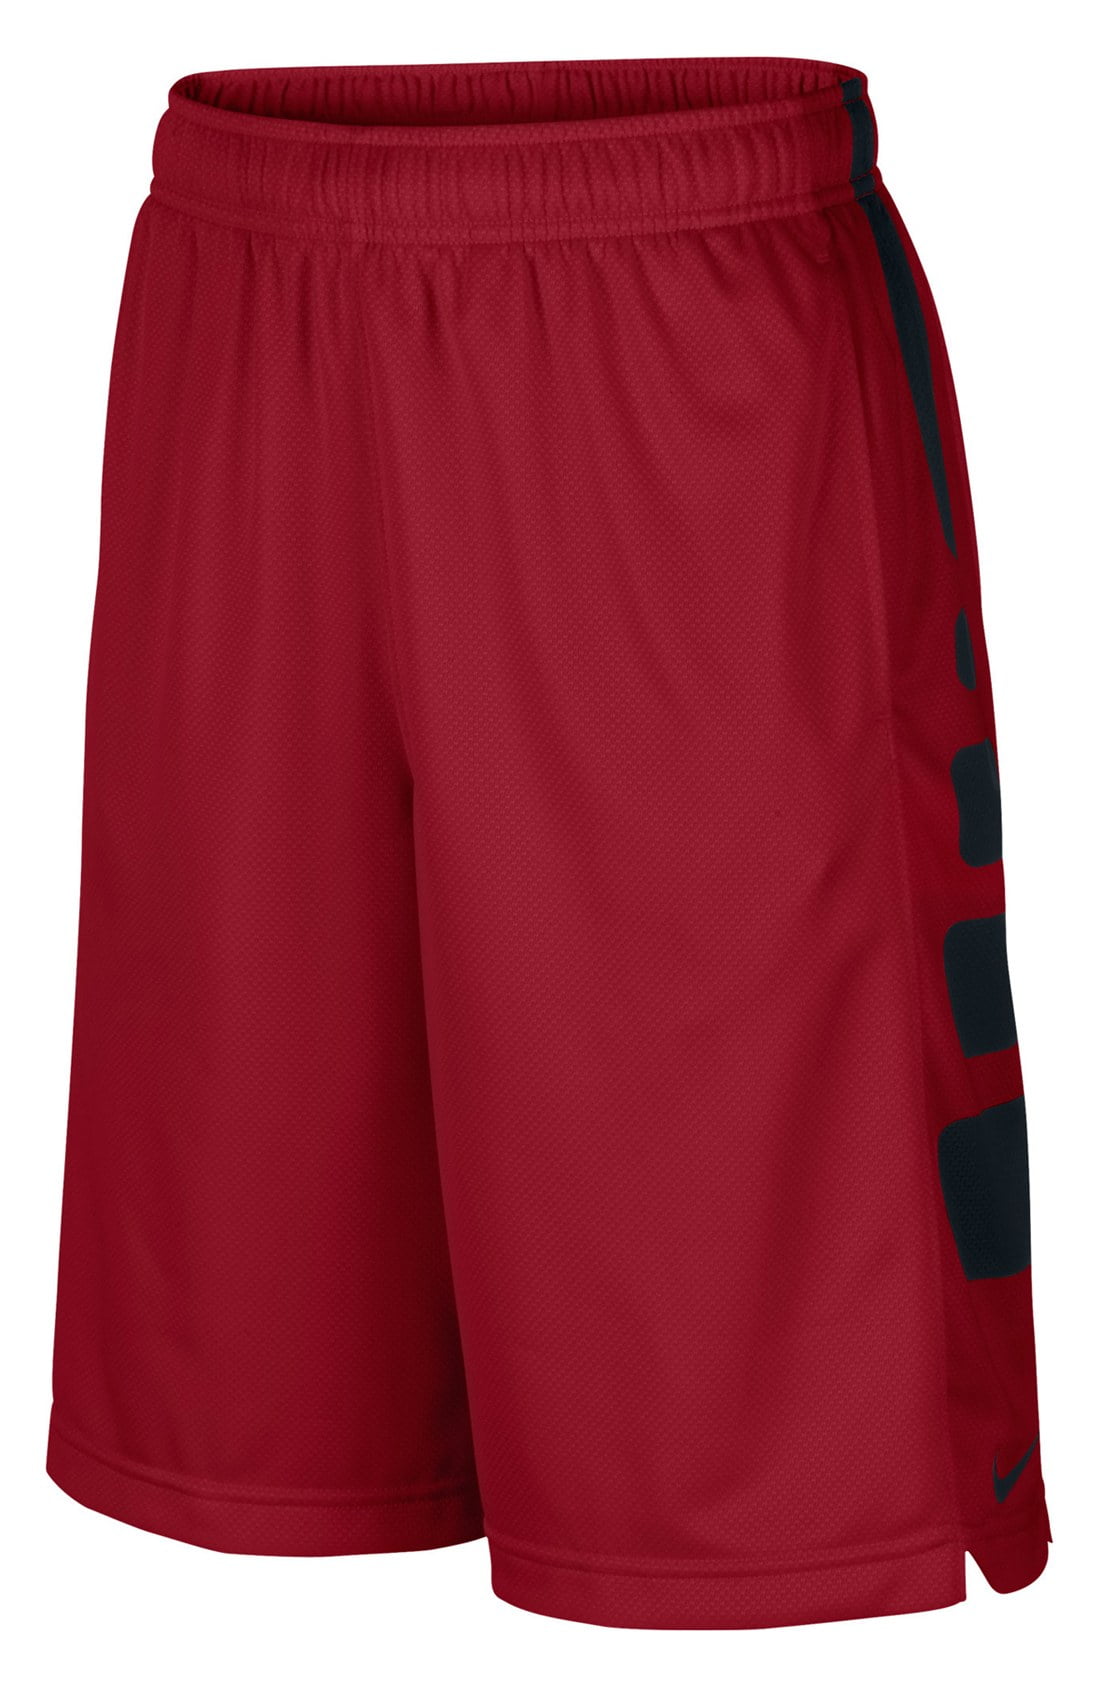 Nike Boys Elite Stripe Basketball Shorts - Walmart.com